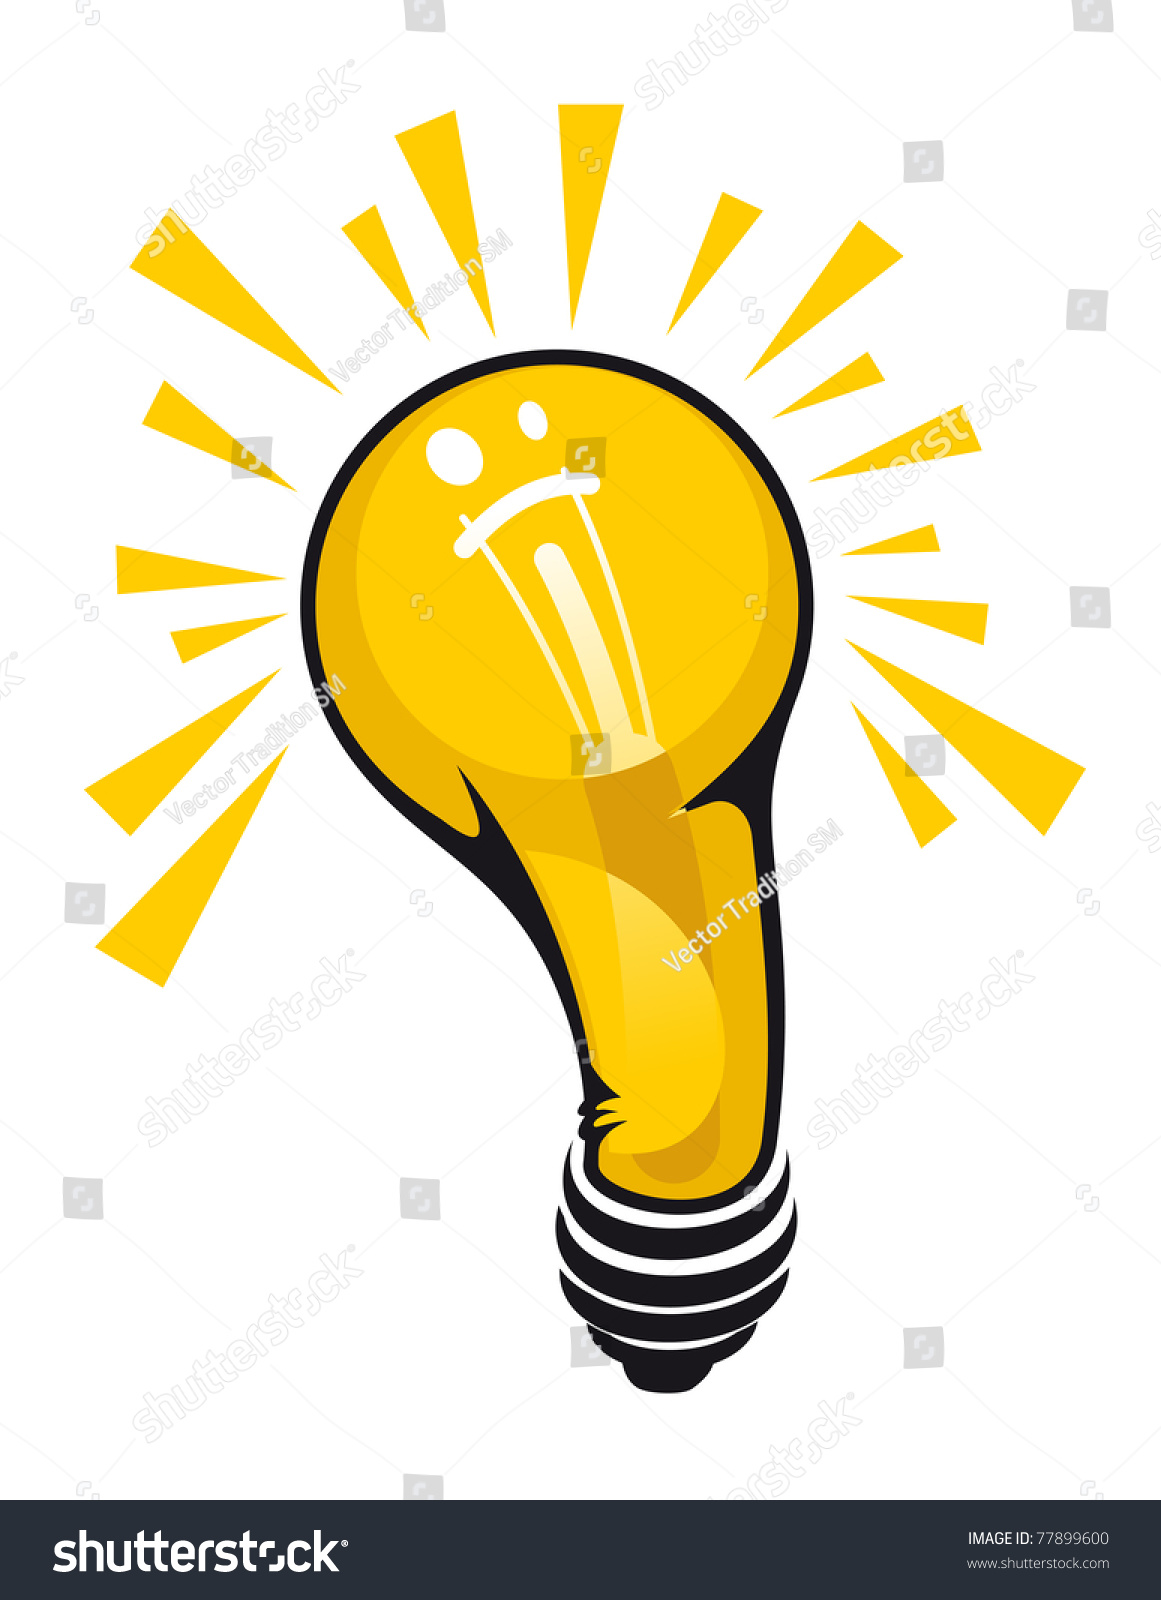 Light Bulb Symbol Isolated On White For Creative Design Or Logo